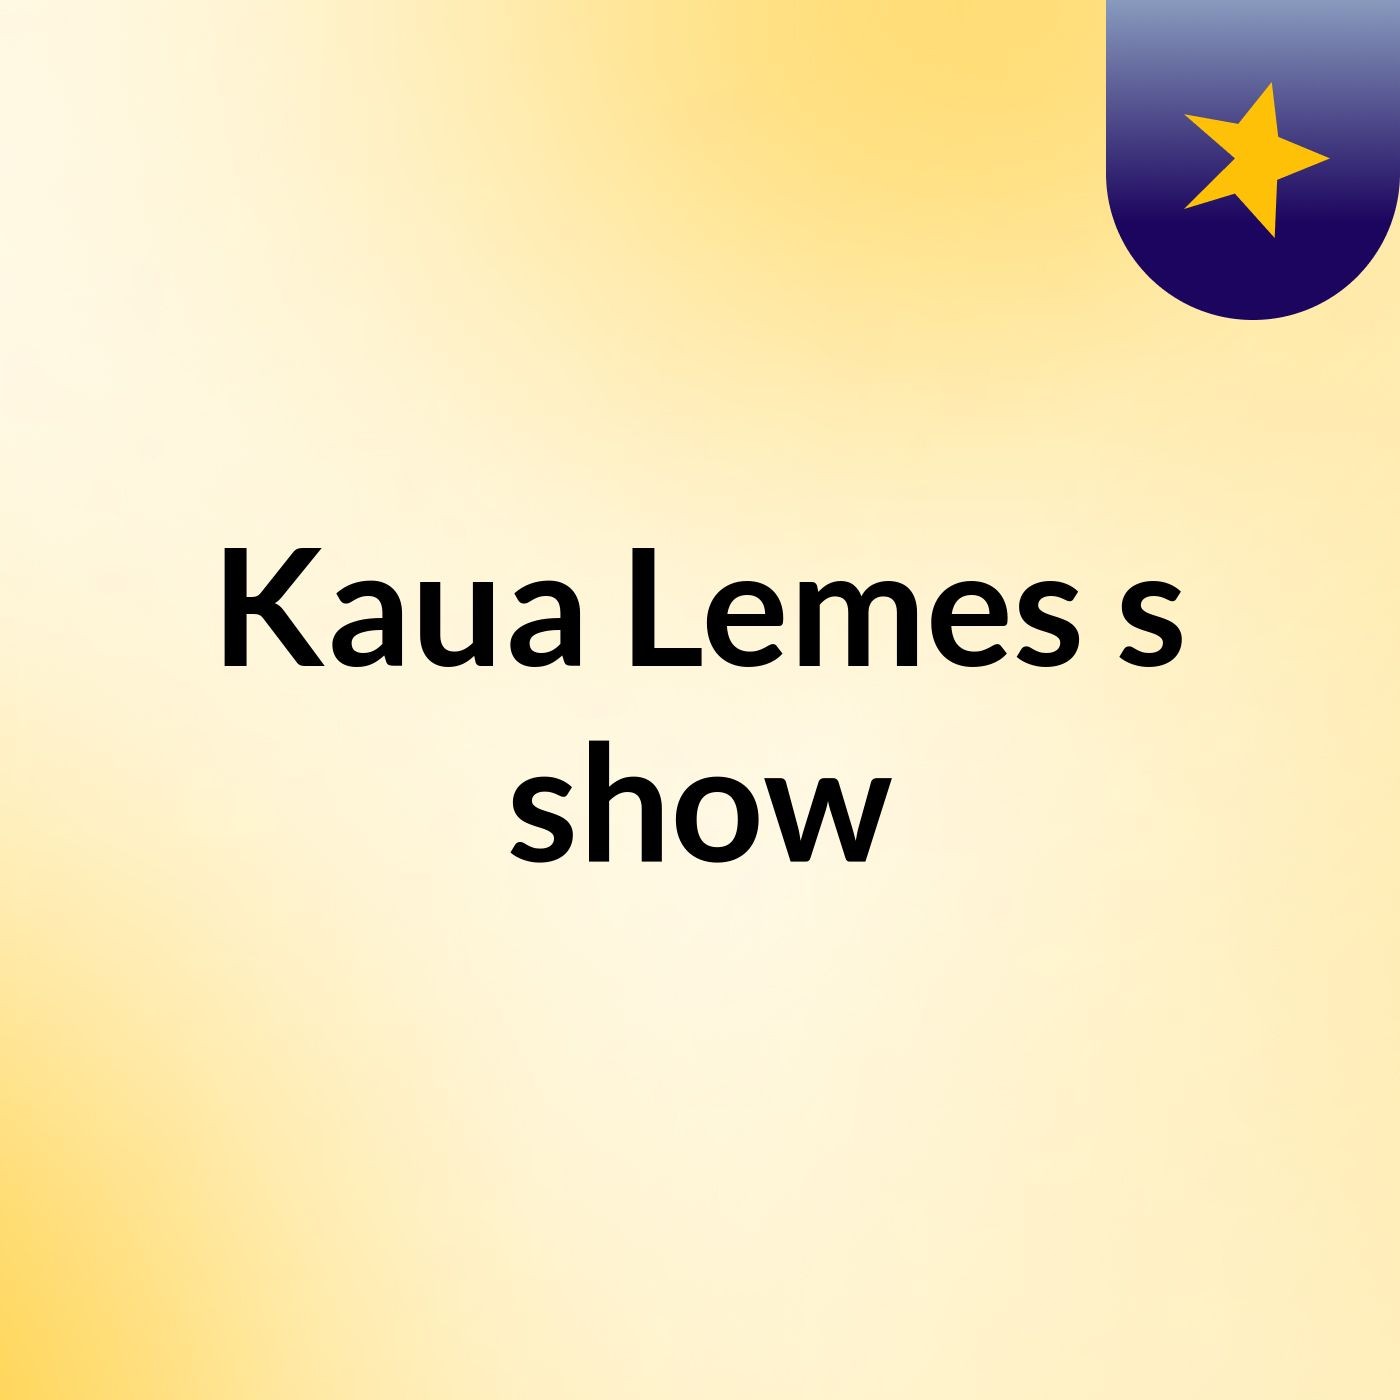 Kaua Lemes's show